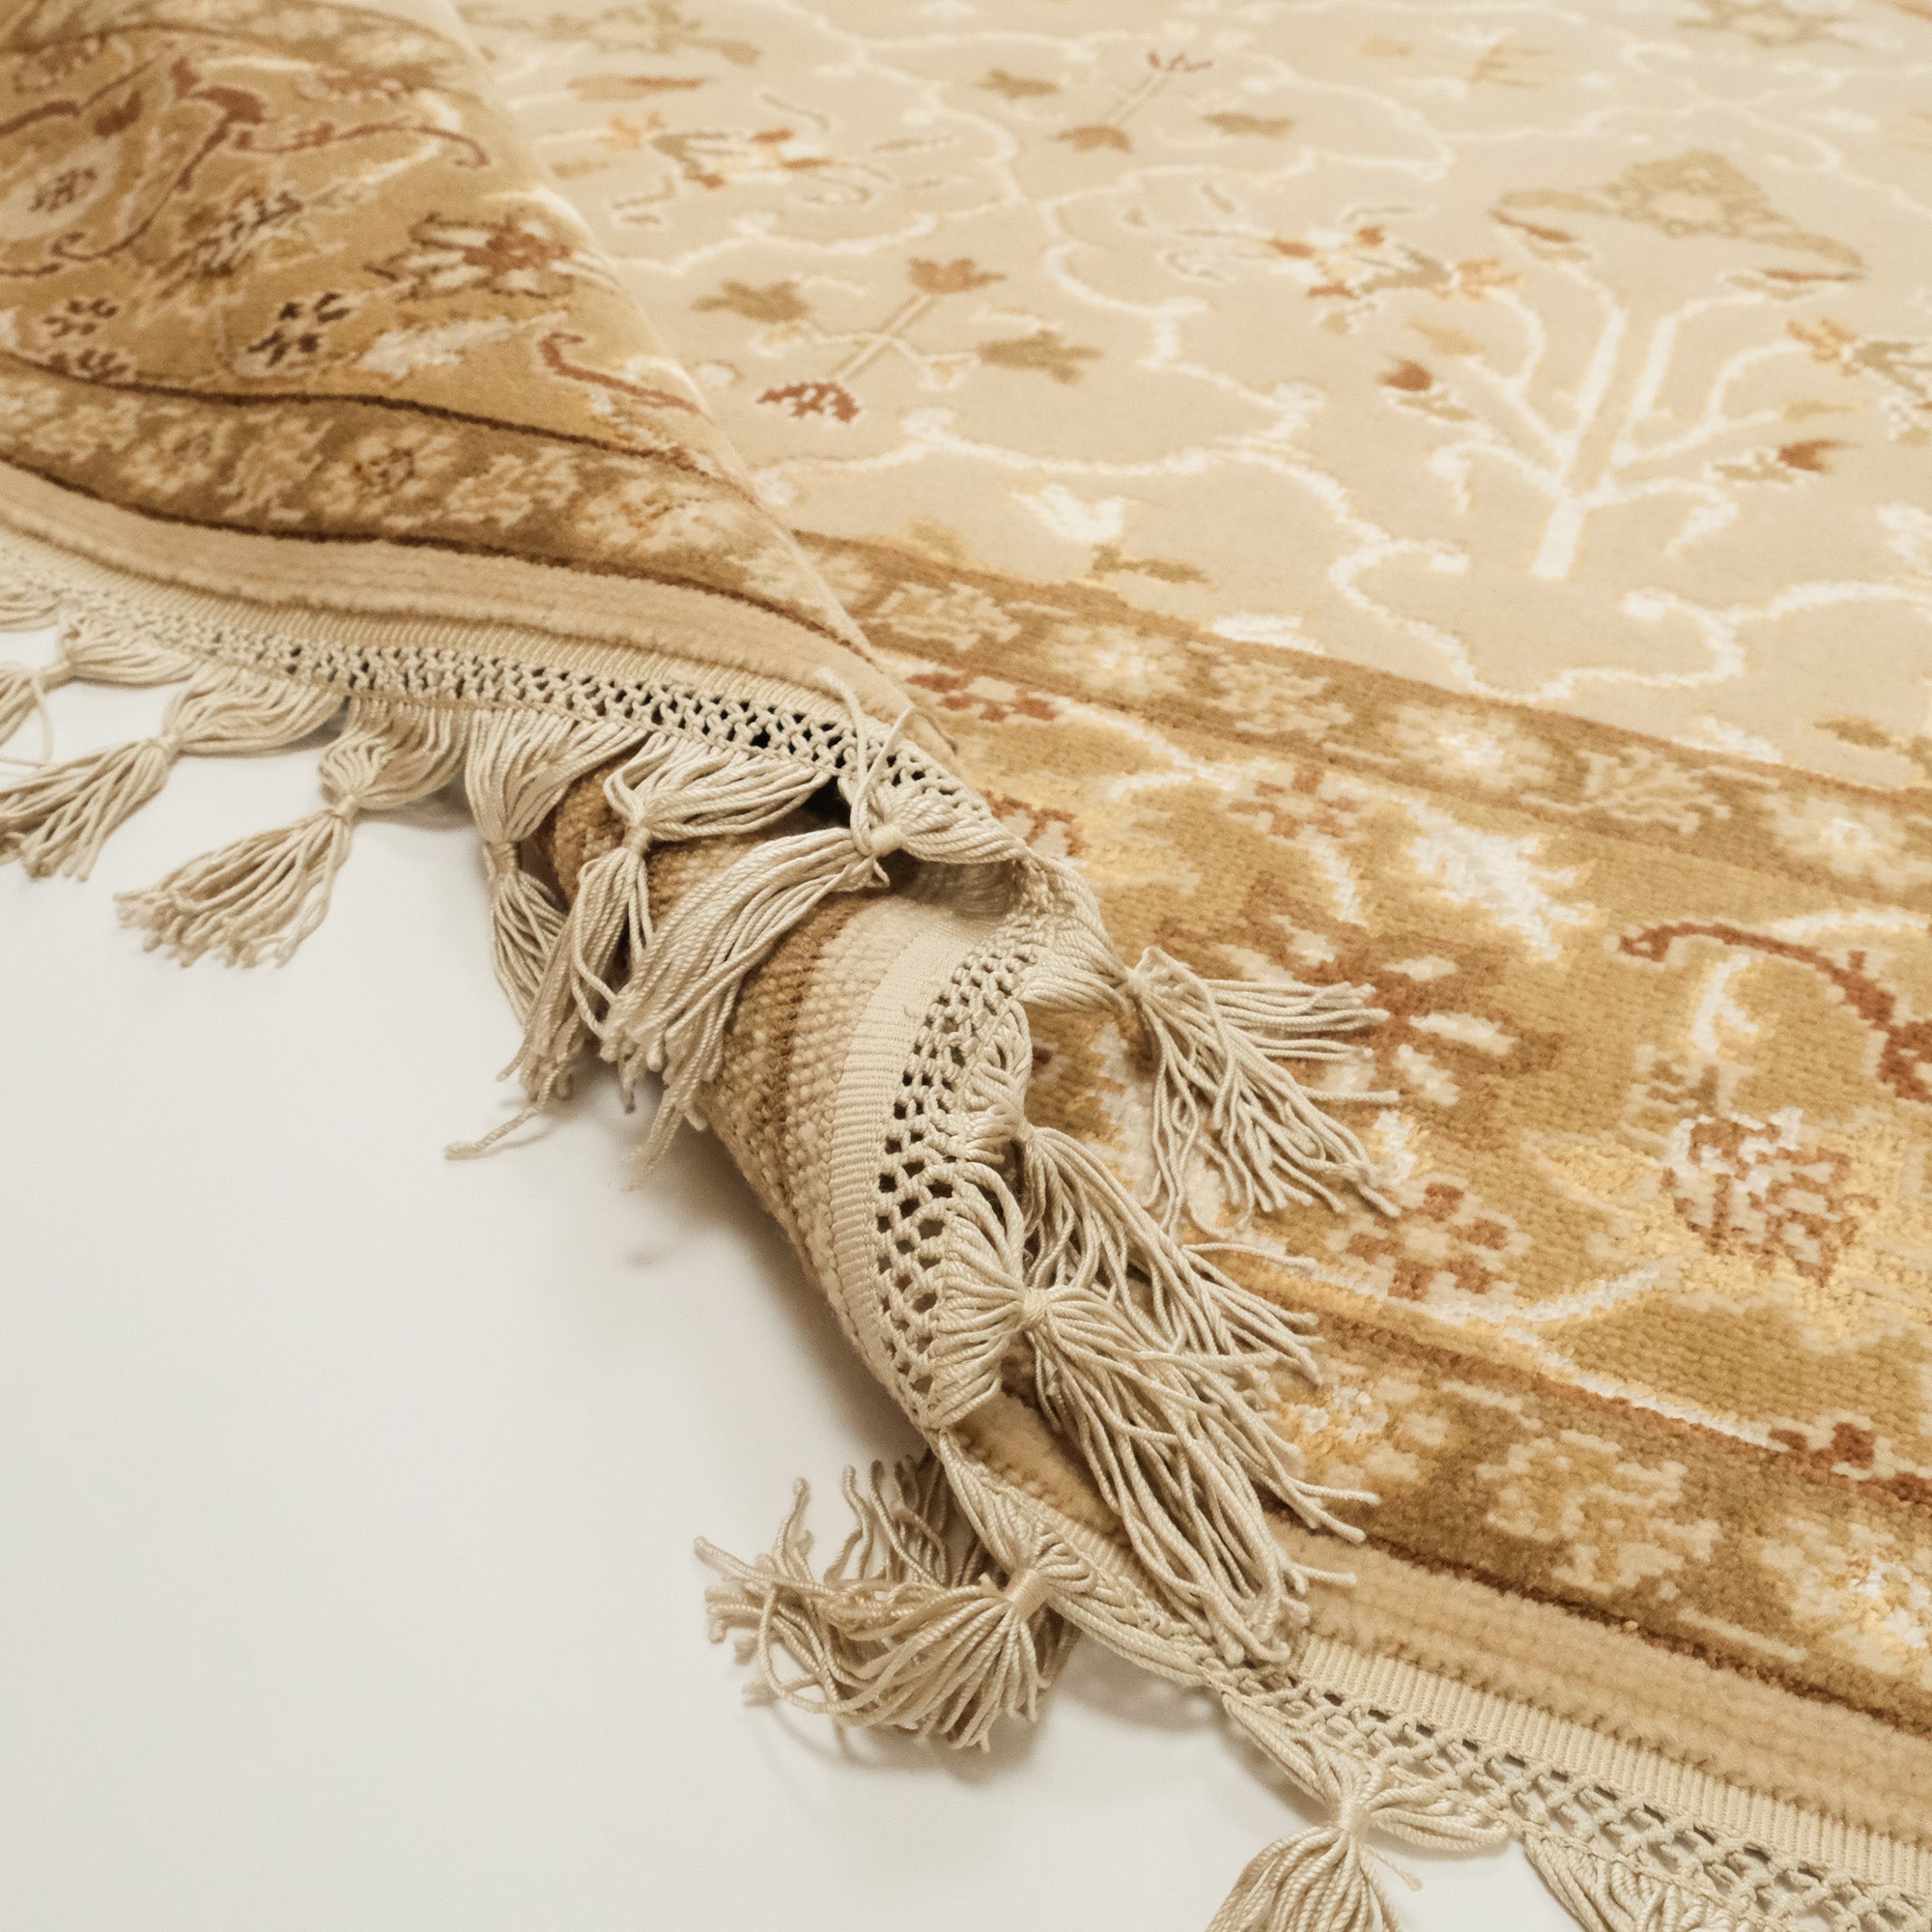 Sultan Series Floral Design Hand Woven Carpet